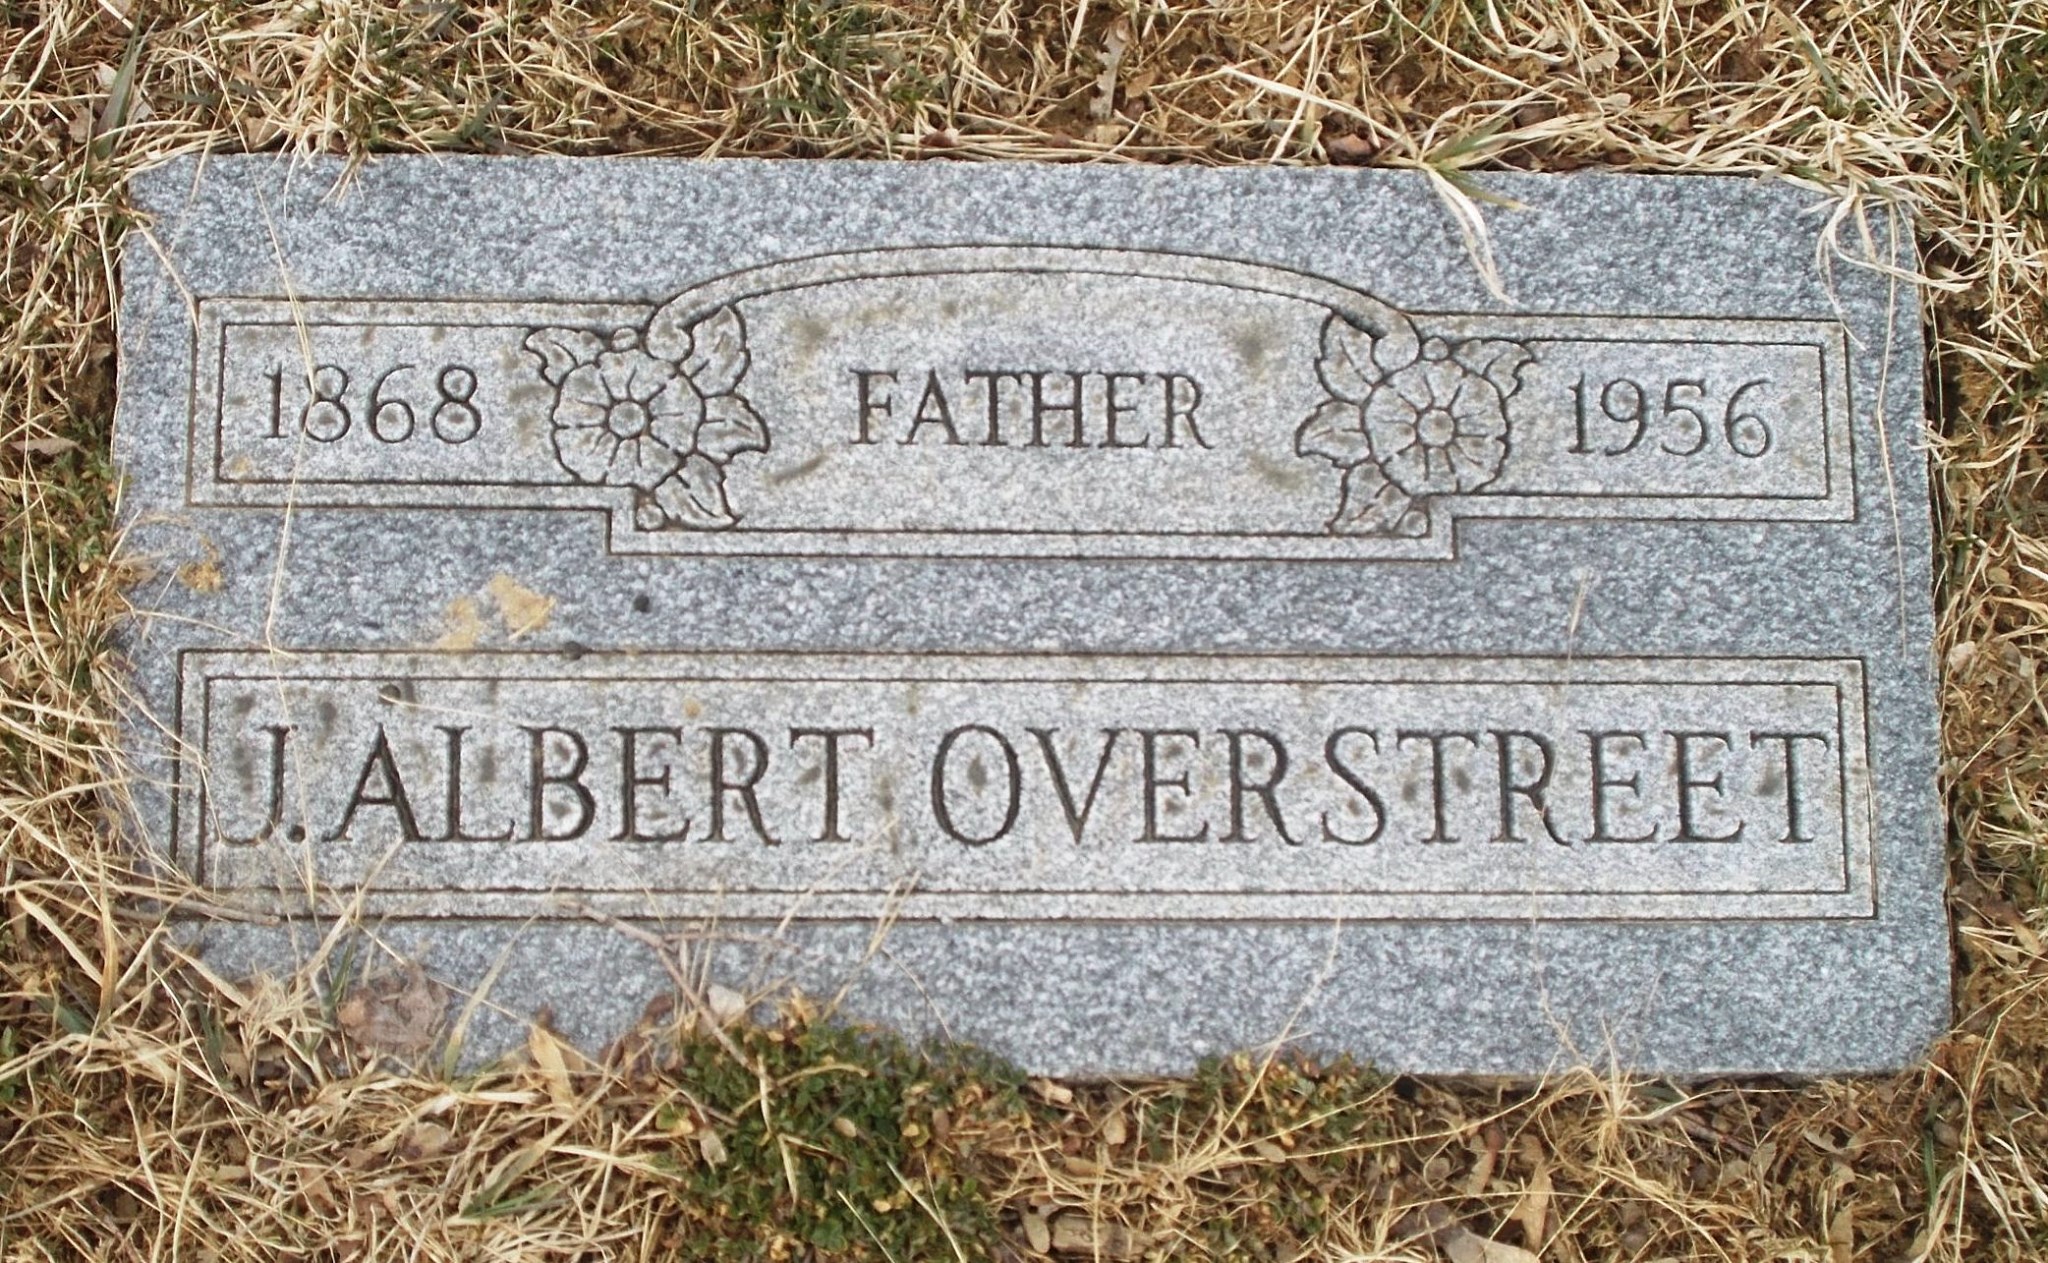 J Albert Overstreet